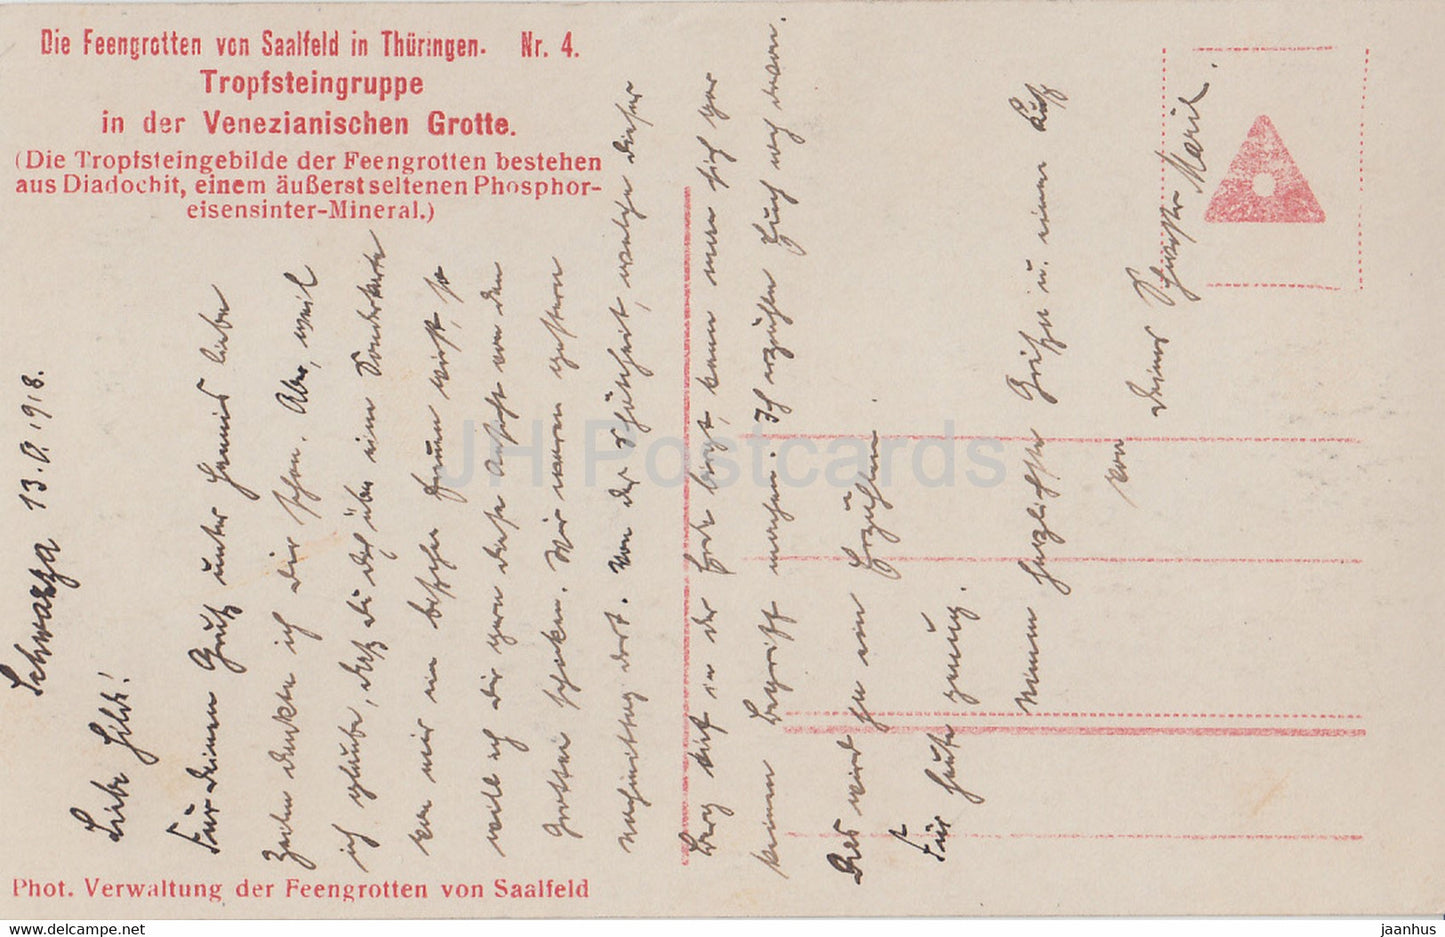 Die Feengrotten von Saalfeld in Thuringen - Tropfsteingruppe in der Venezianischen Grotte old postcard - Germany - used